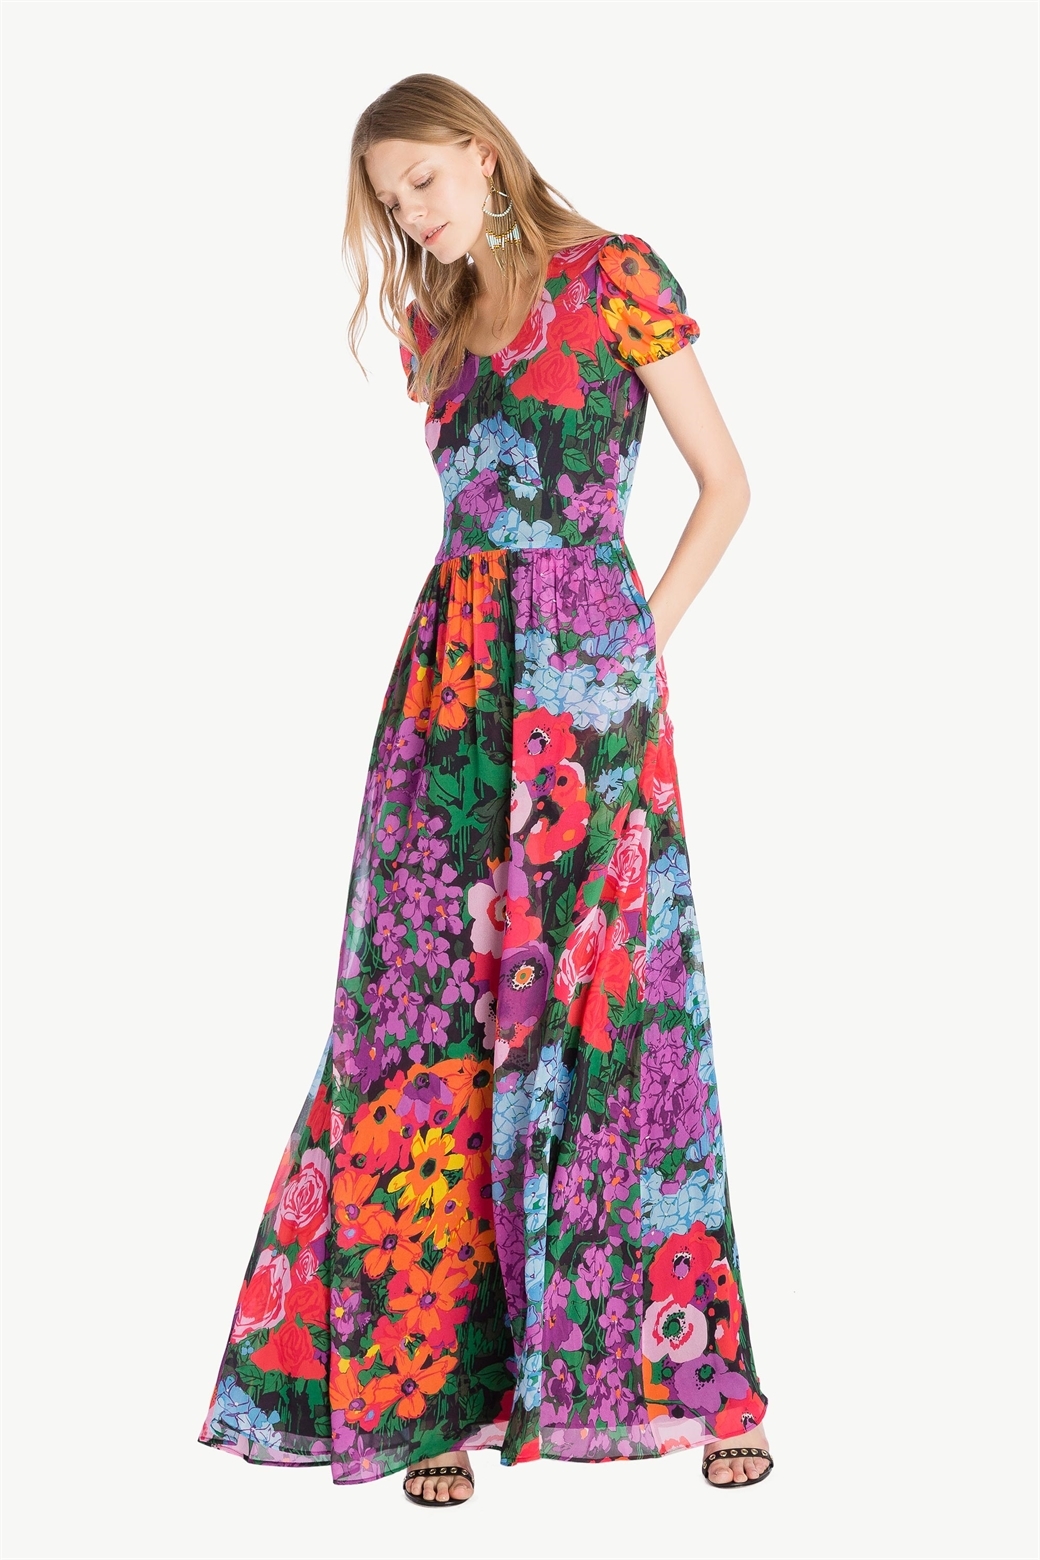 Vestido de flores arco iris, de Twinset (371 euros).